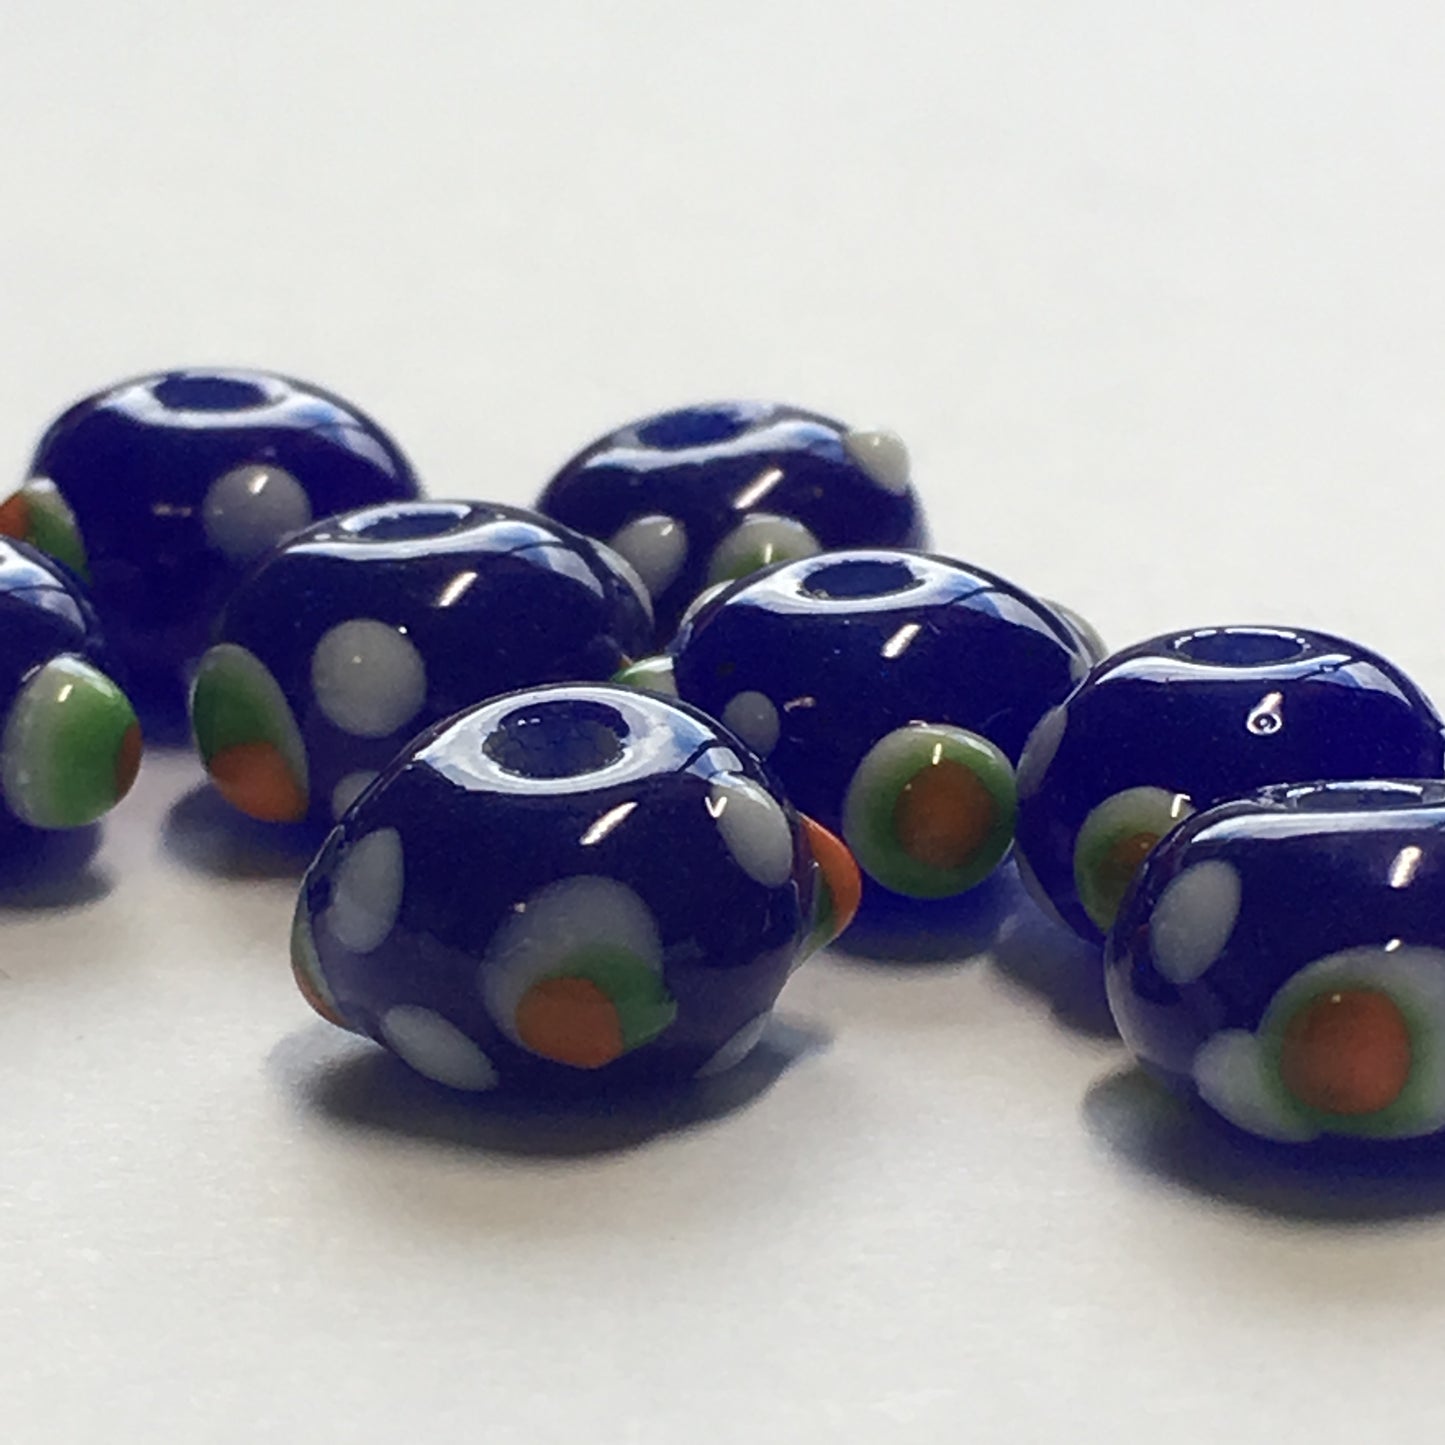 Bumpy Dark Blue Glass Lampwork Beads, 10 x 7 mm - 8 or 10 Beads